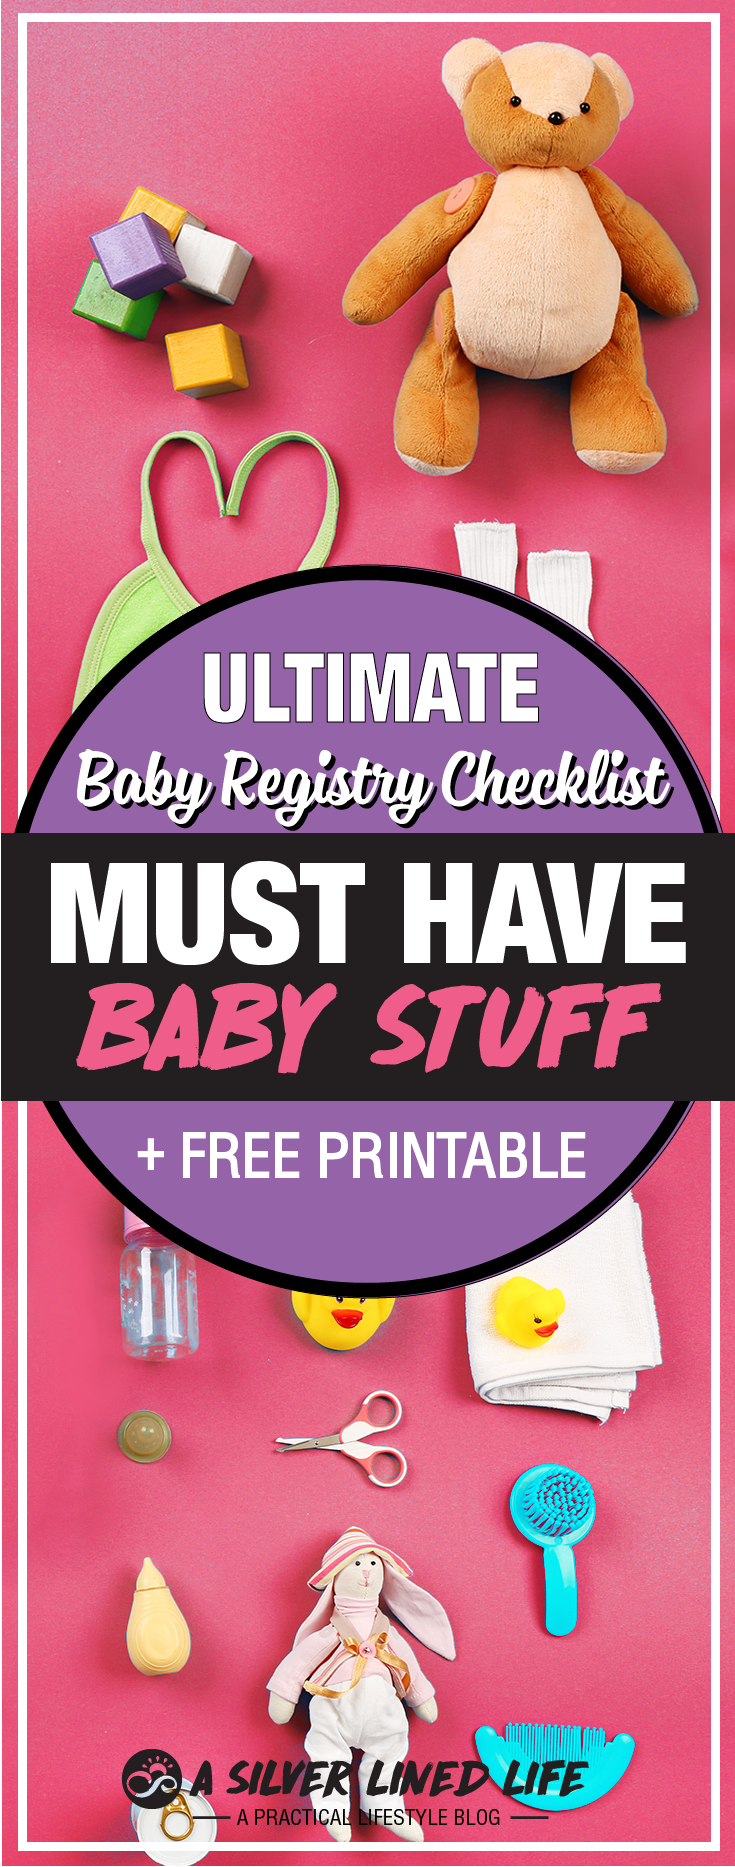 https://asilverlinedlife.com/wp-content/uploads/2017/08/Ultimate-Baby-Registry-Checklist3-01.png